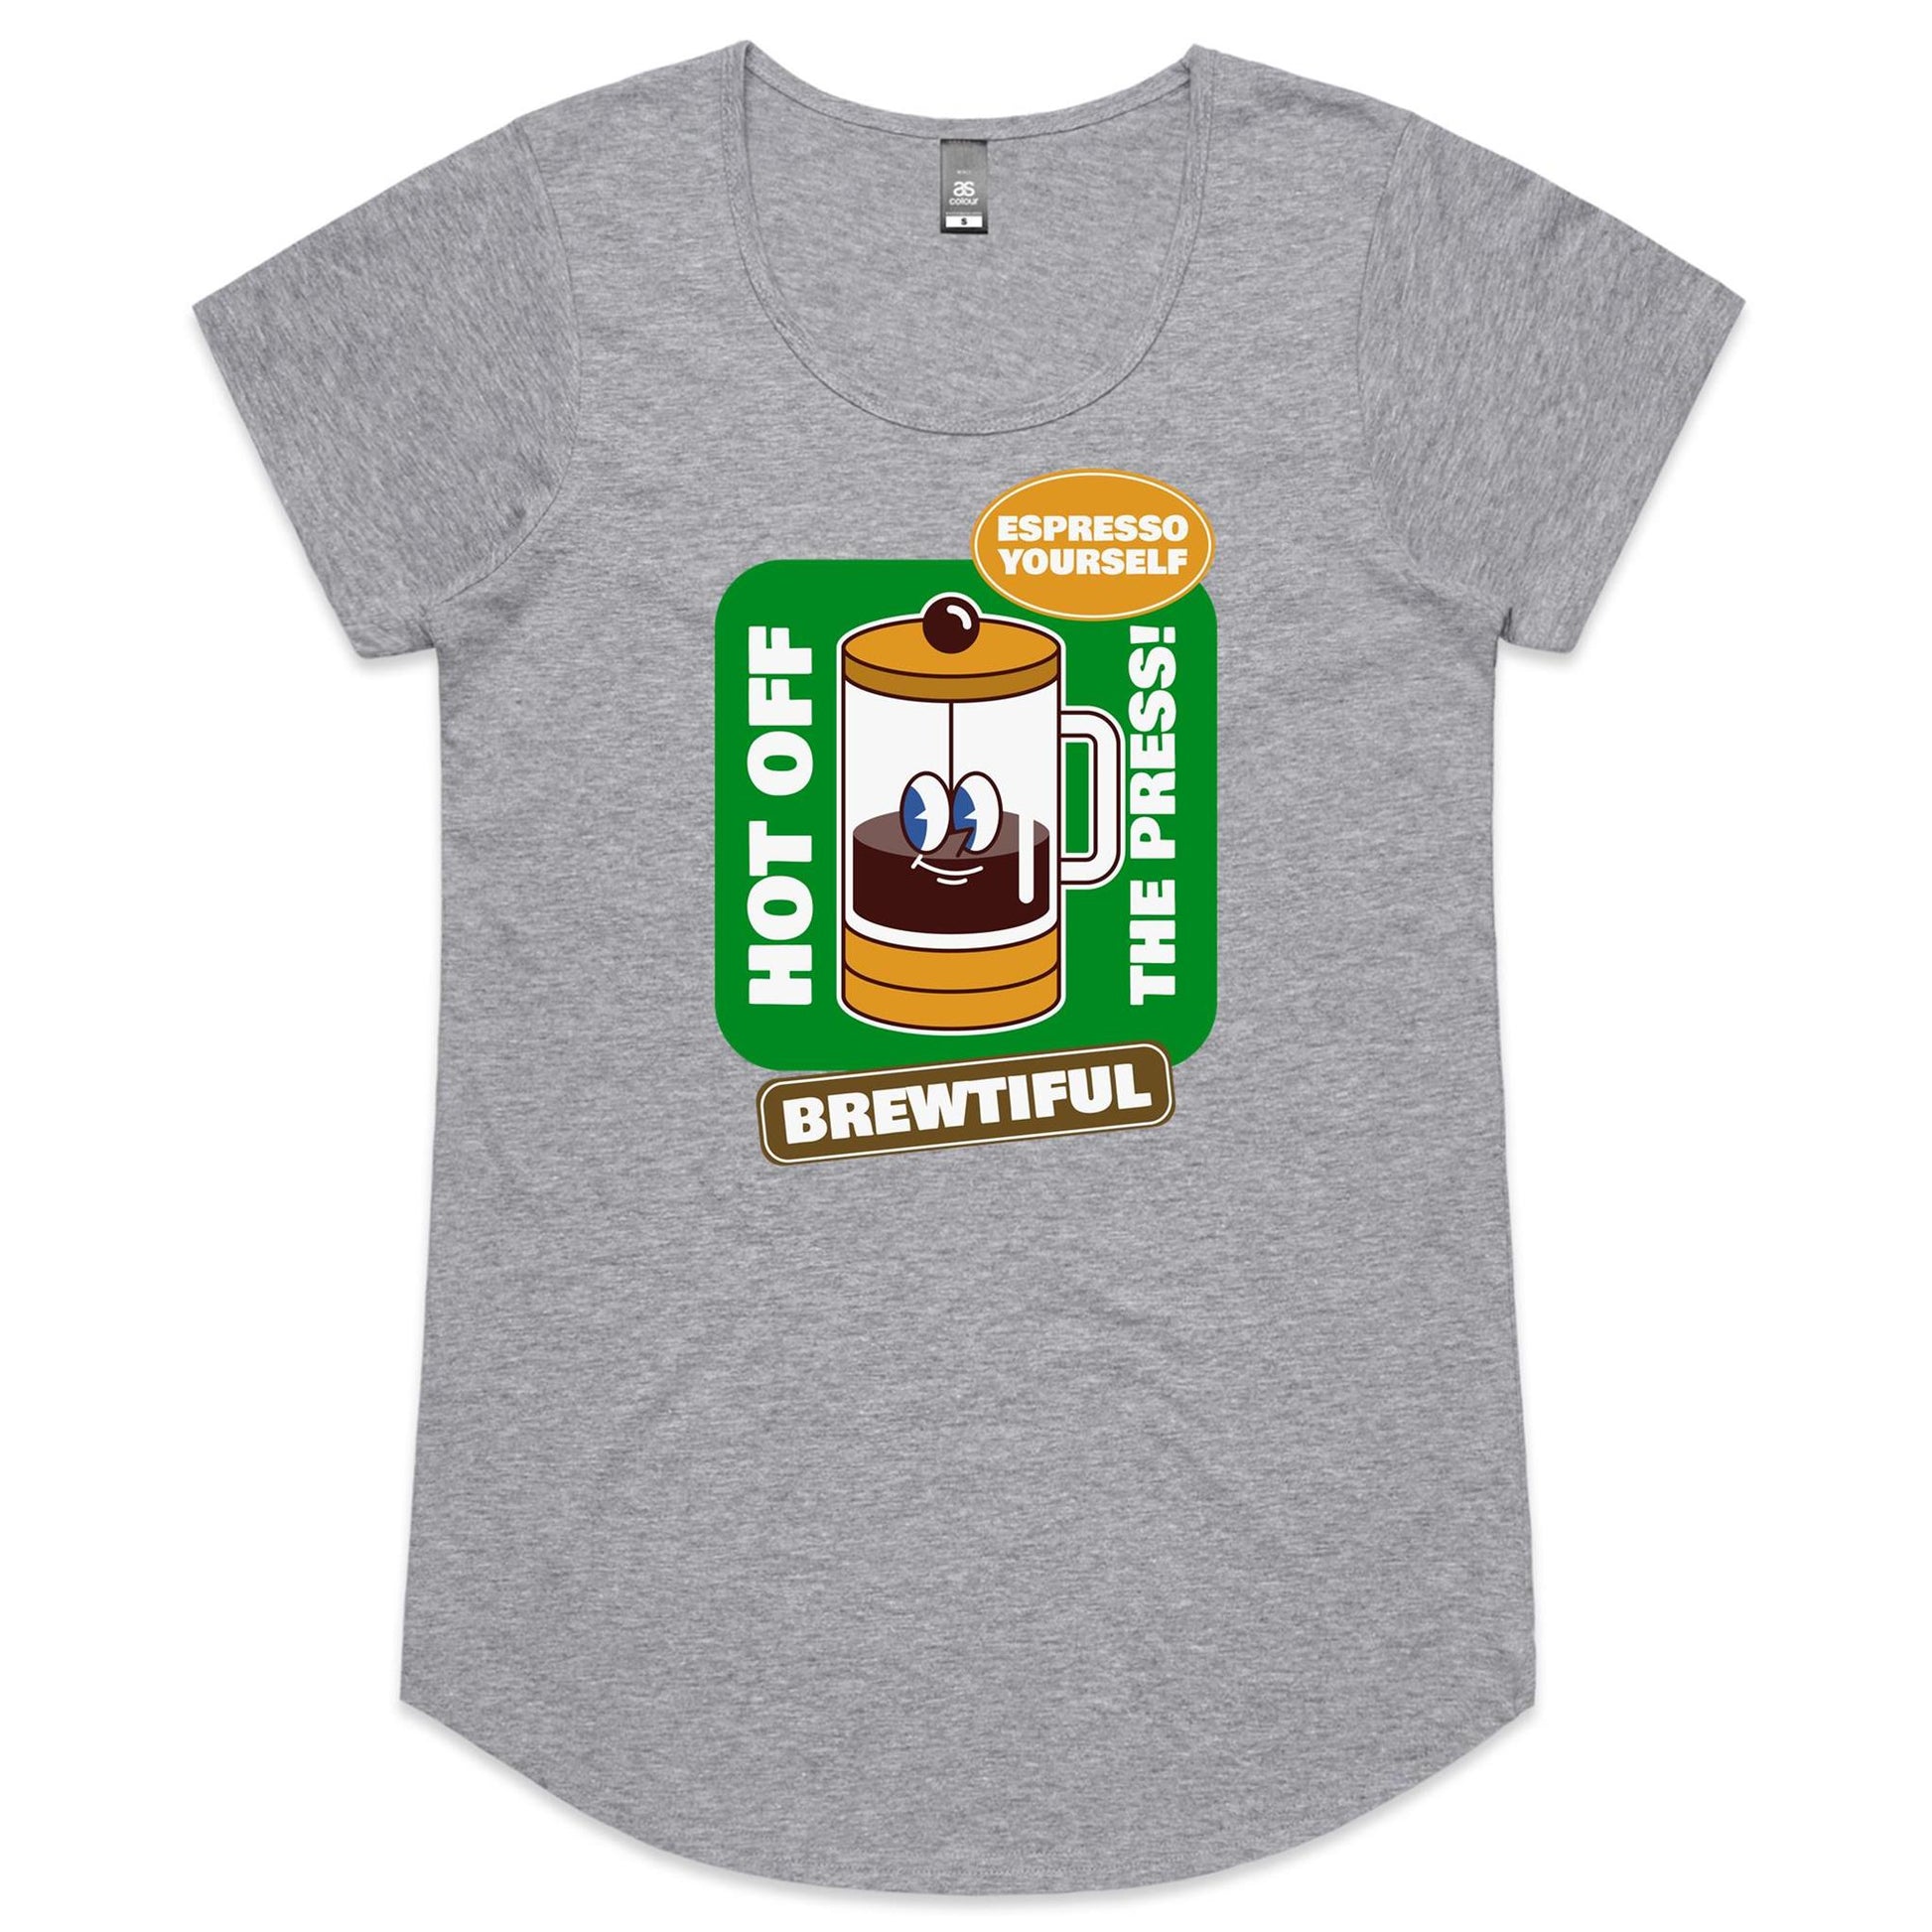 Brewtiful, Espresso Yourself - Womens Scoop Neck T-Shirt Grey Marle Womens Scoop Neck T-shirt Coffee